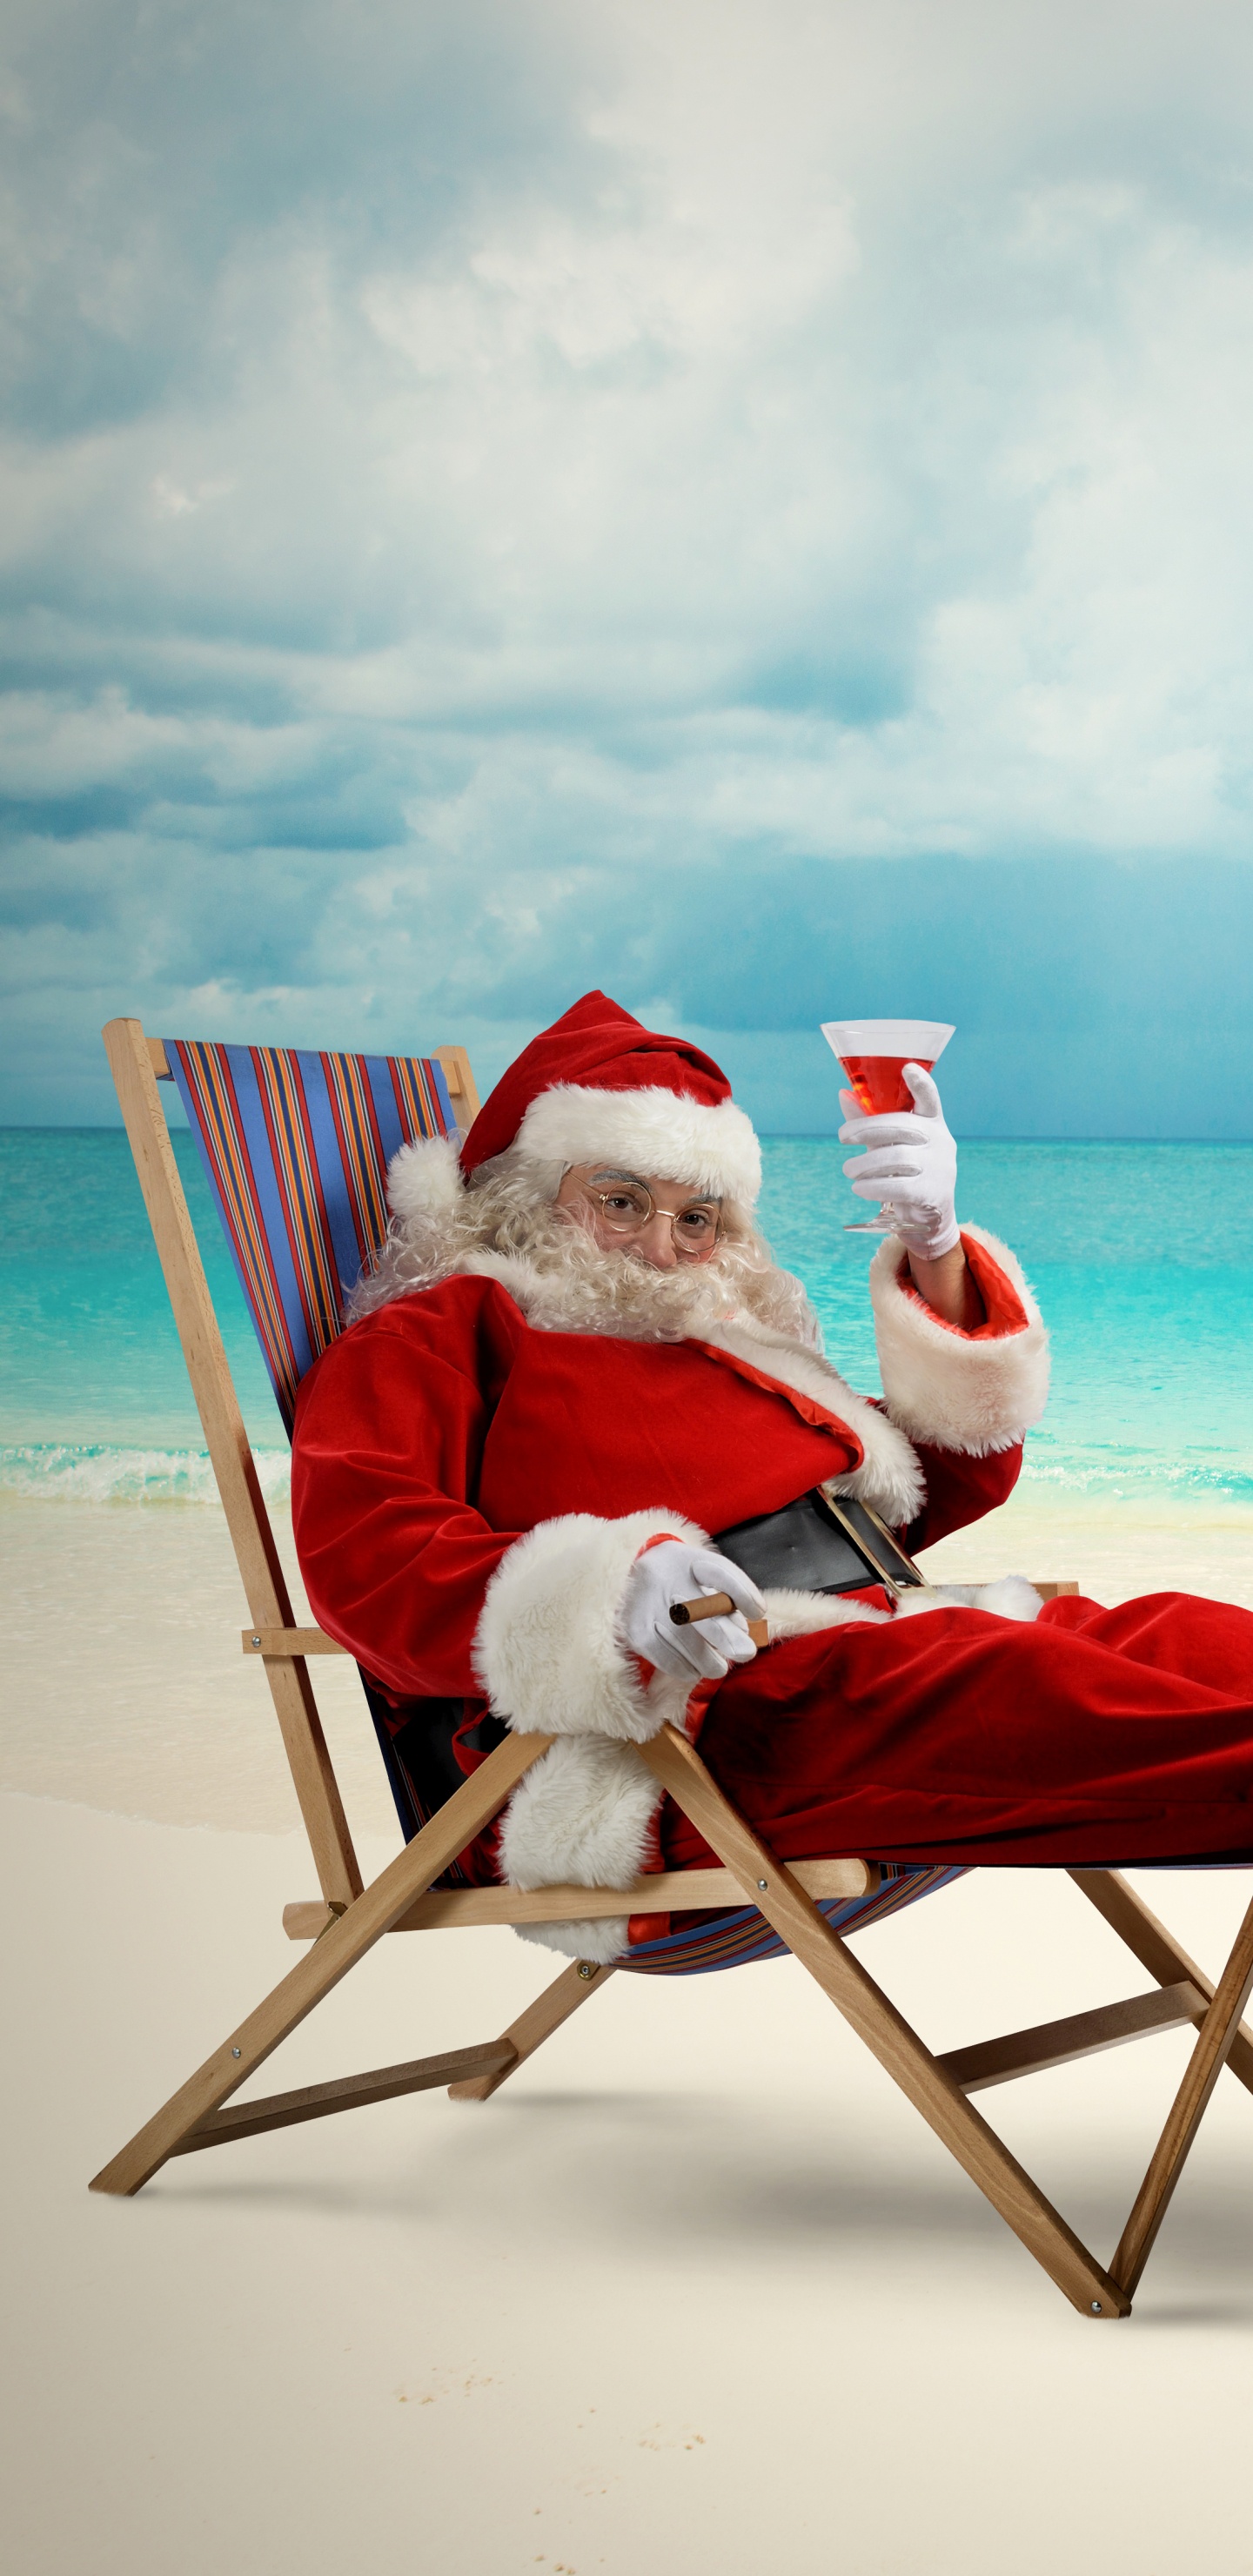 Santa Claus, Christmas Day, Beach, Sea, Vacation. Wallpaper in 1440x2960 Resolution